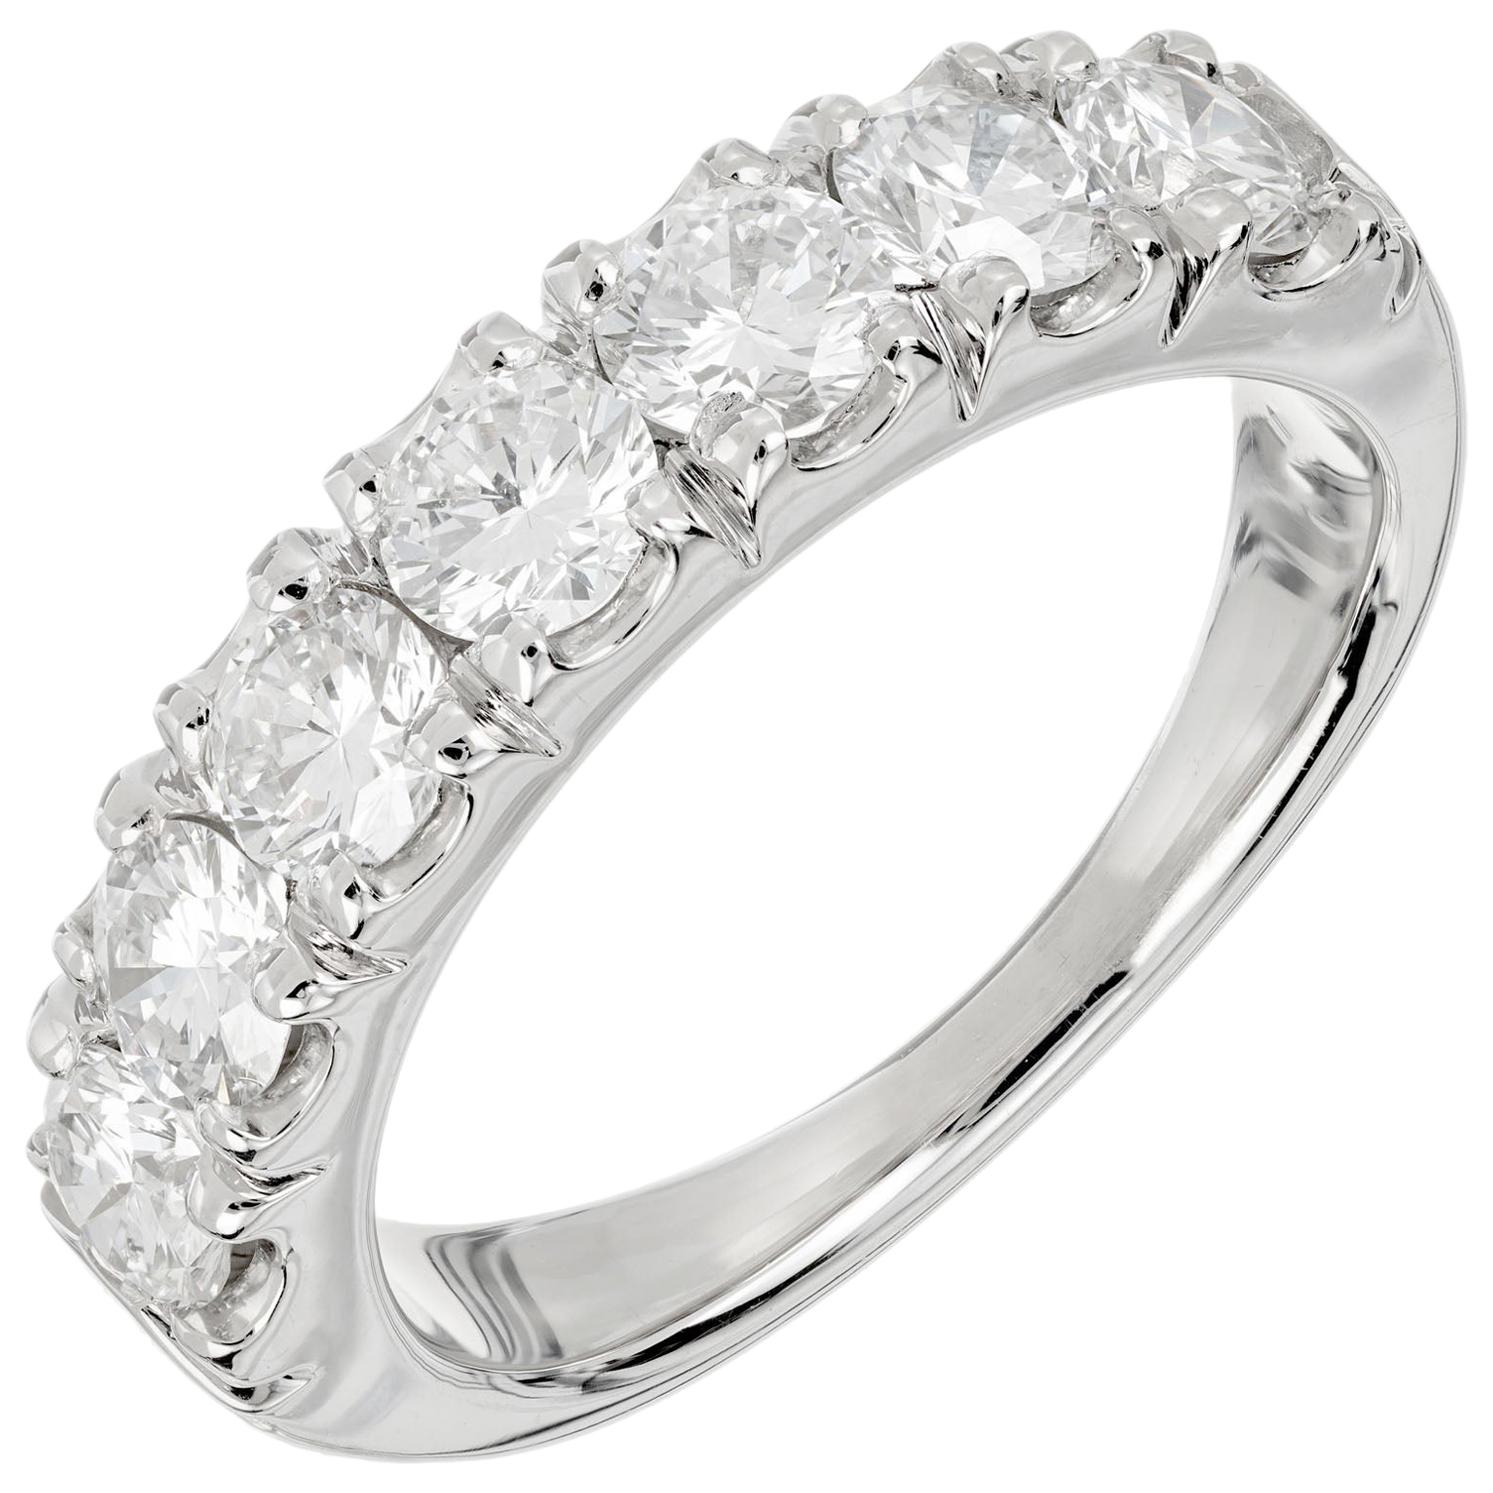 Peter Suchy 1.37 Carat Diamond Platinum Wedding Band Ring For Sale